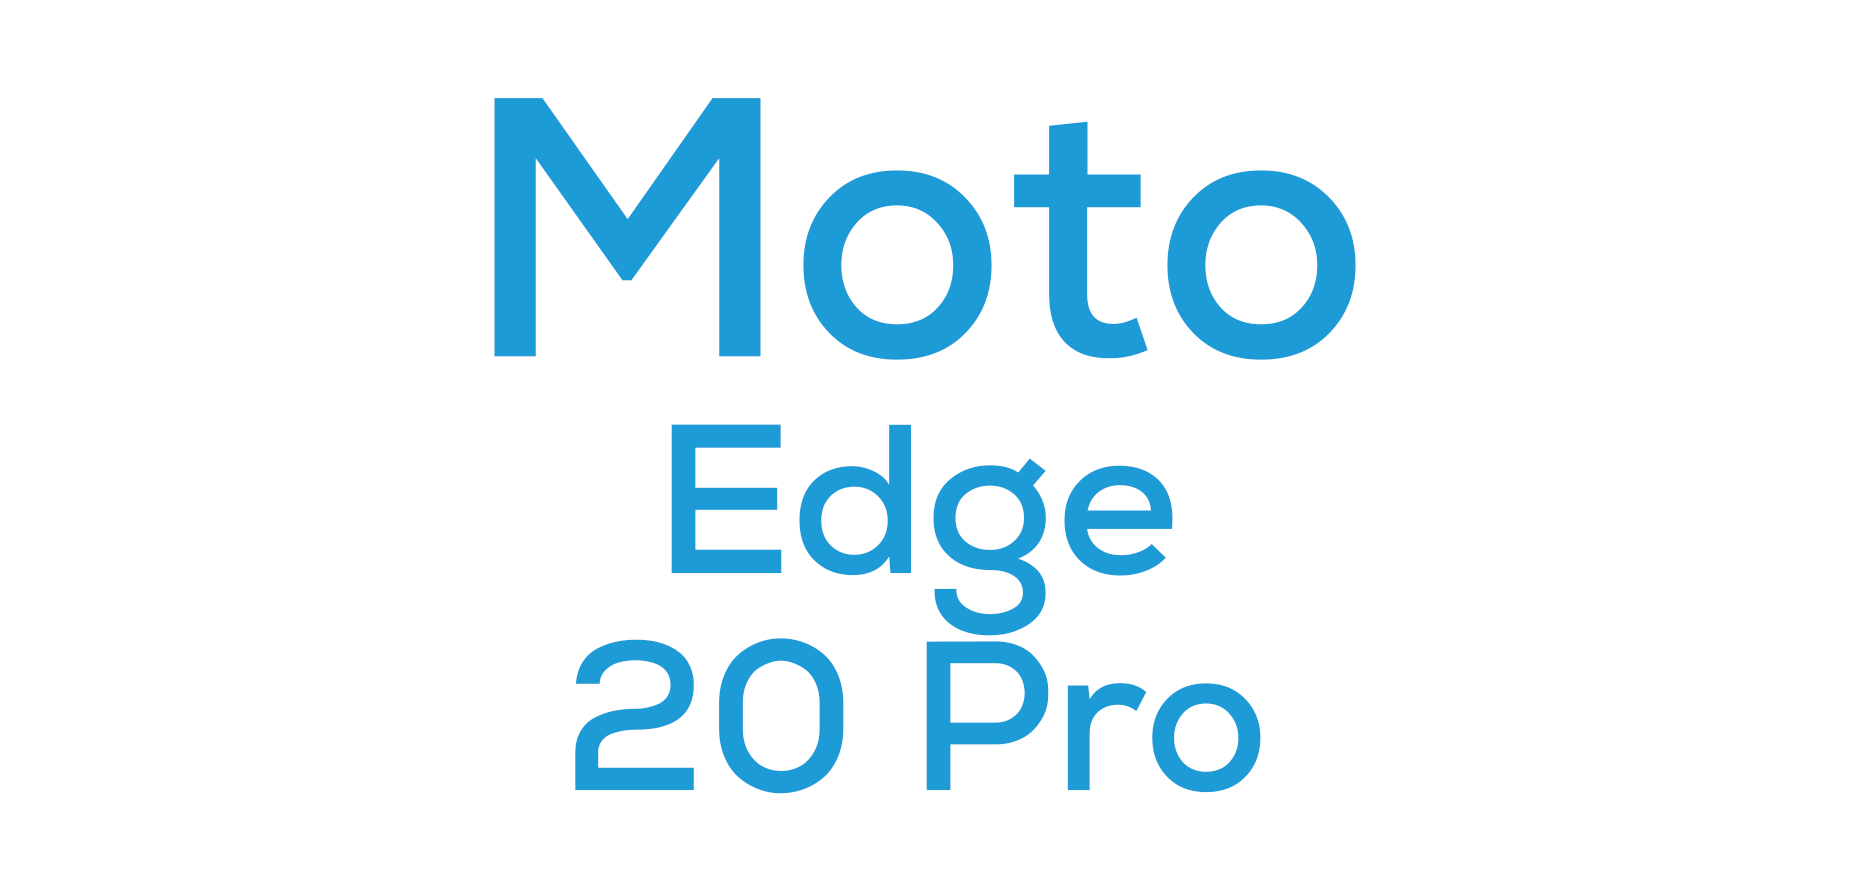 Moto Edge 20 Pro (2153-1)